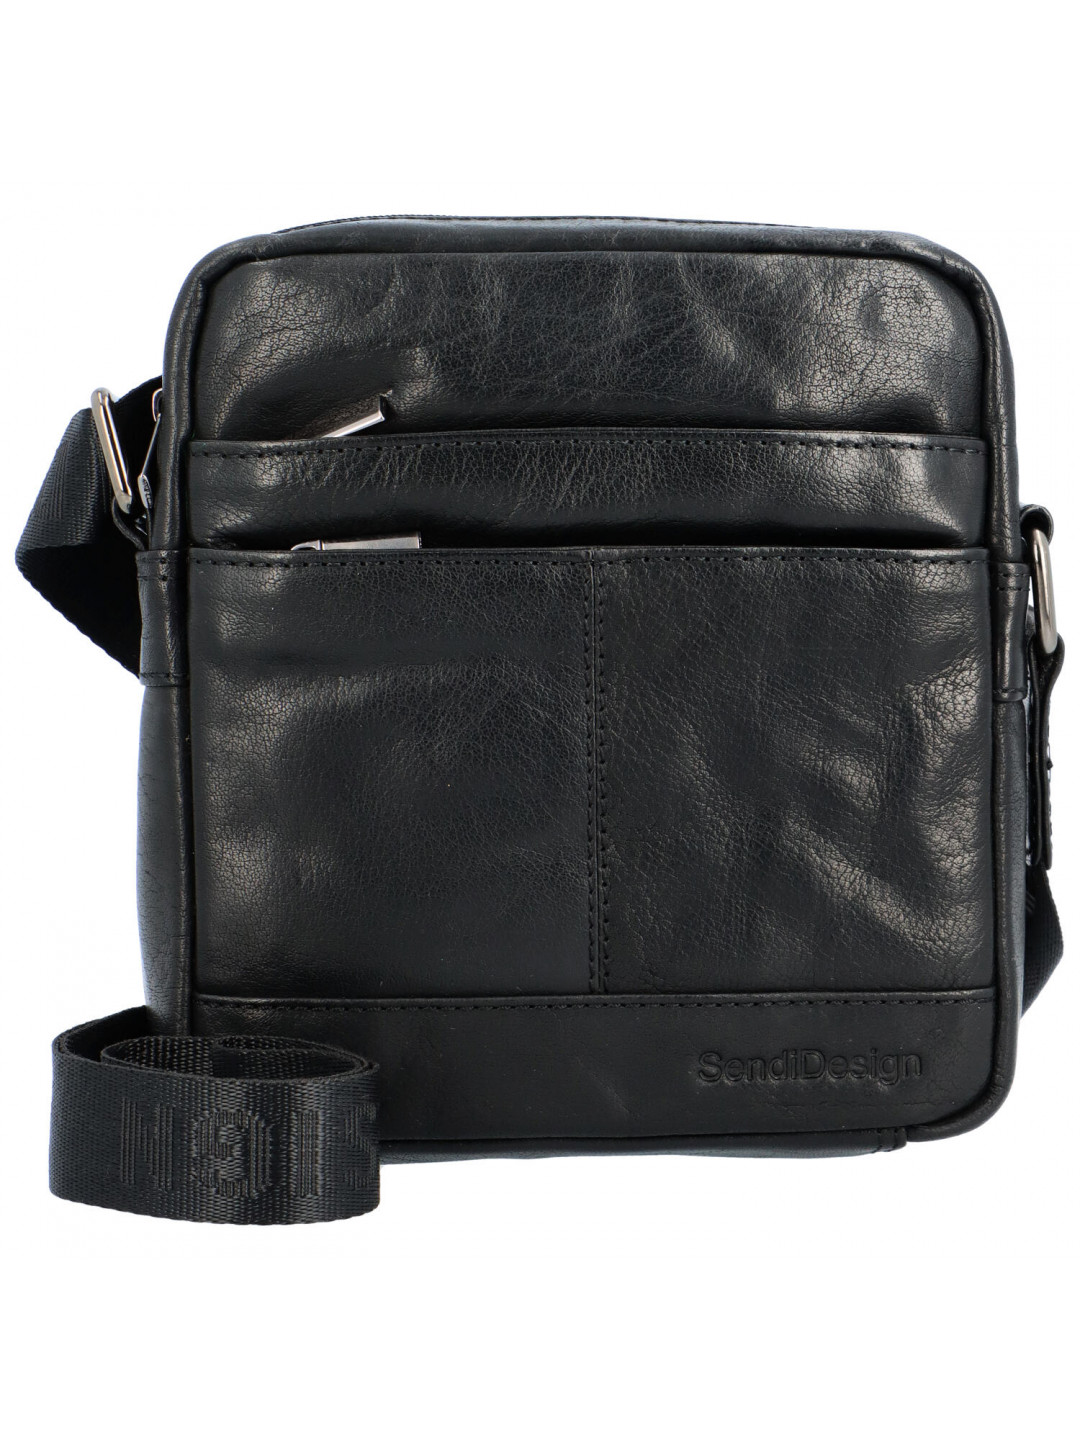 Pánská kožená taška černá – SendiDesign Shaper B